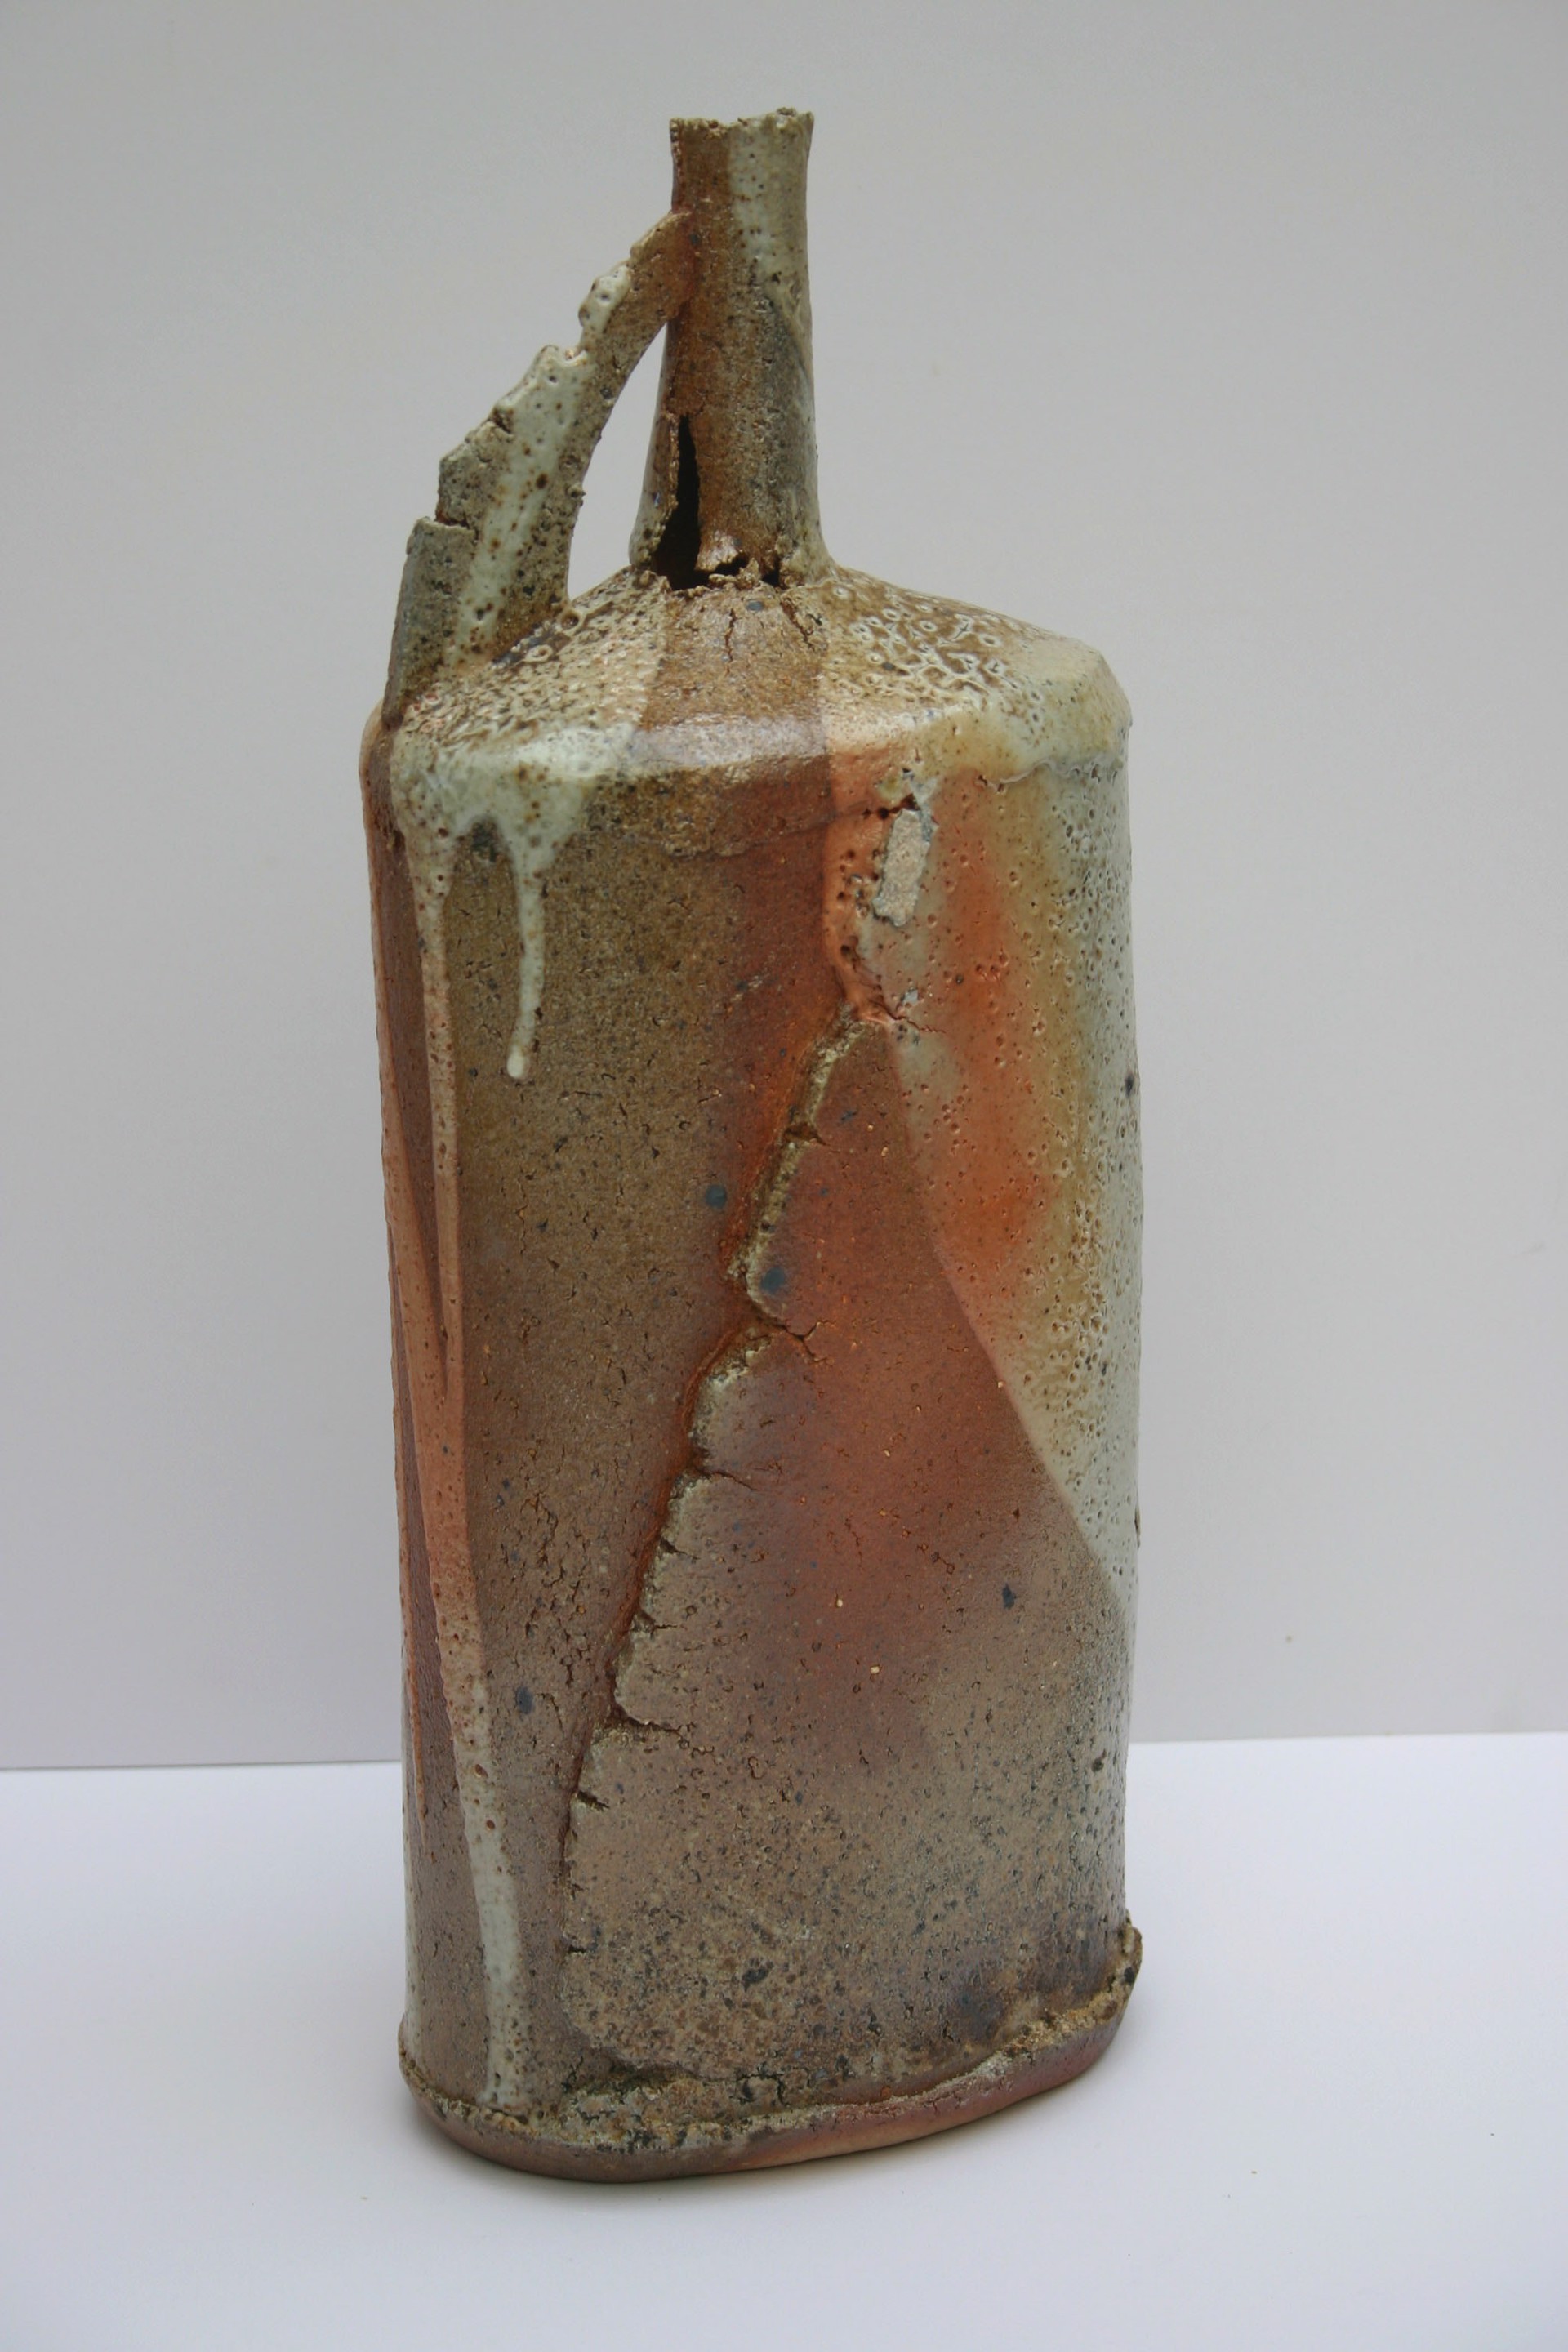 Shino glazed bottle anagama fired by Jane Wheeler